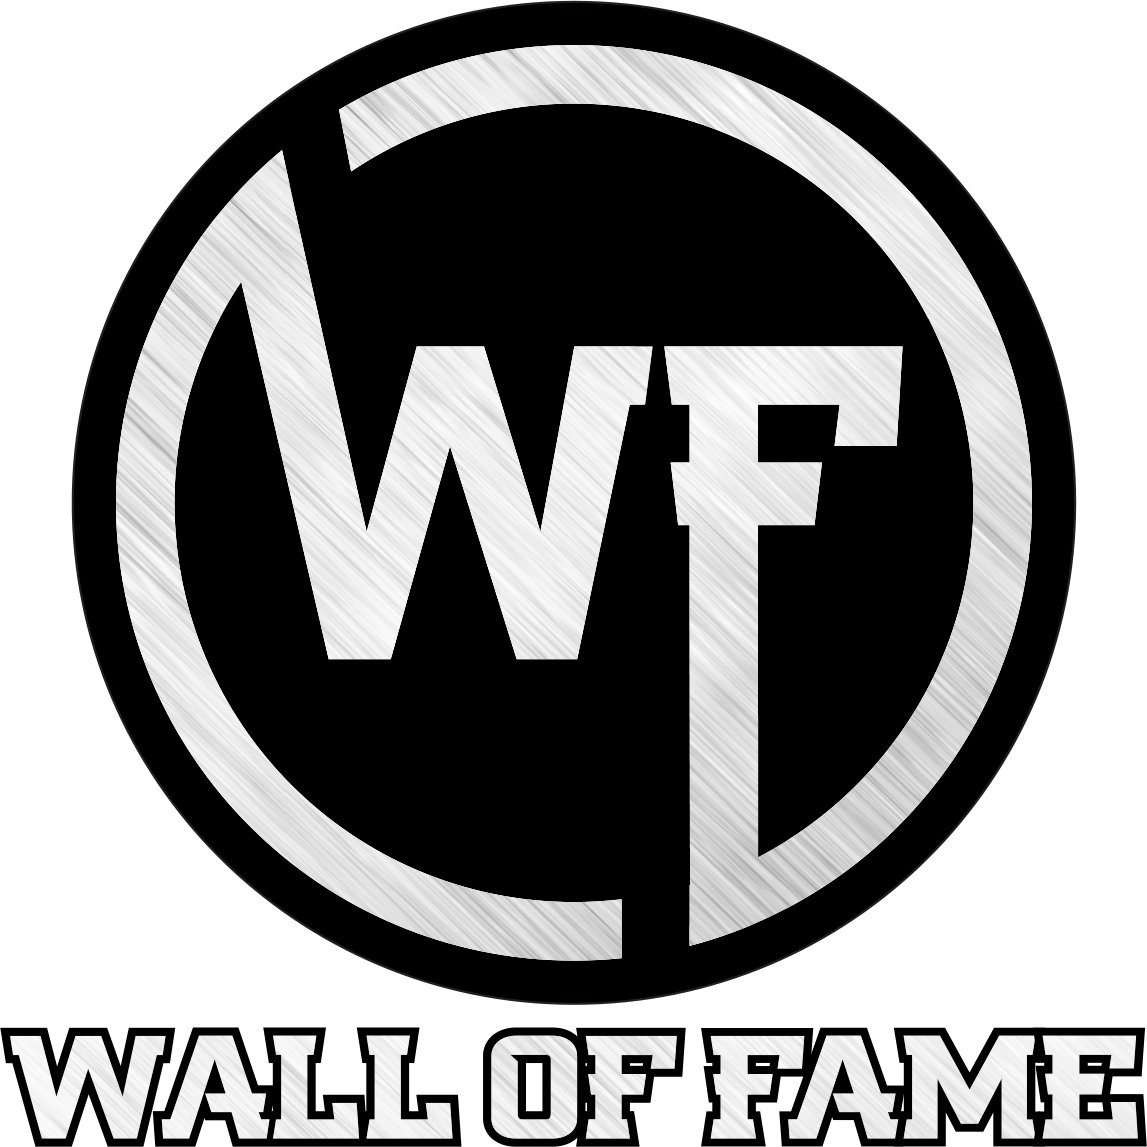 Wall of Fame Logo - Shopping Cart. Wall of Fame